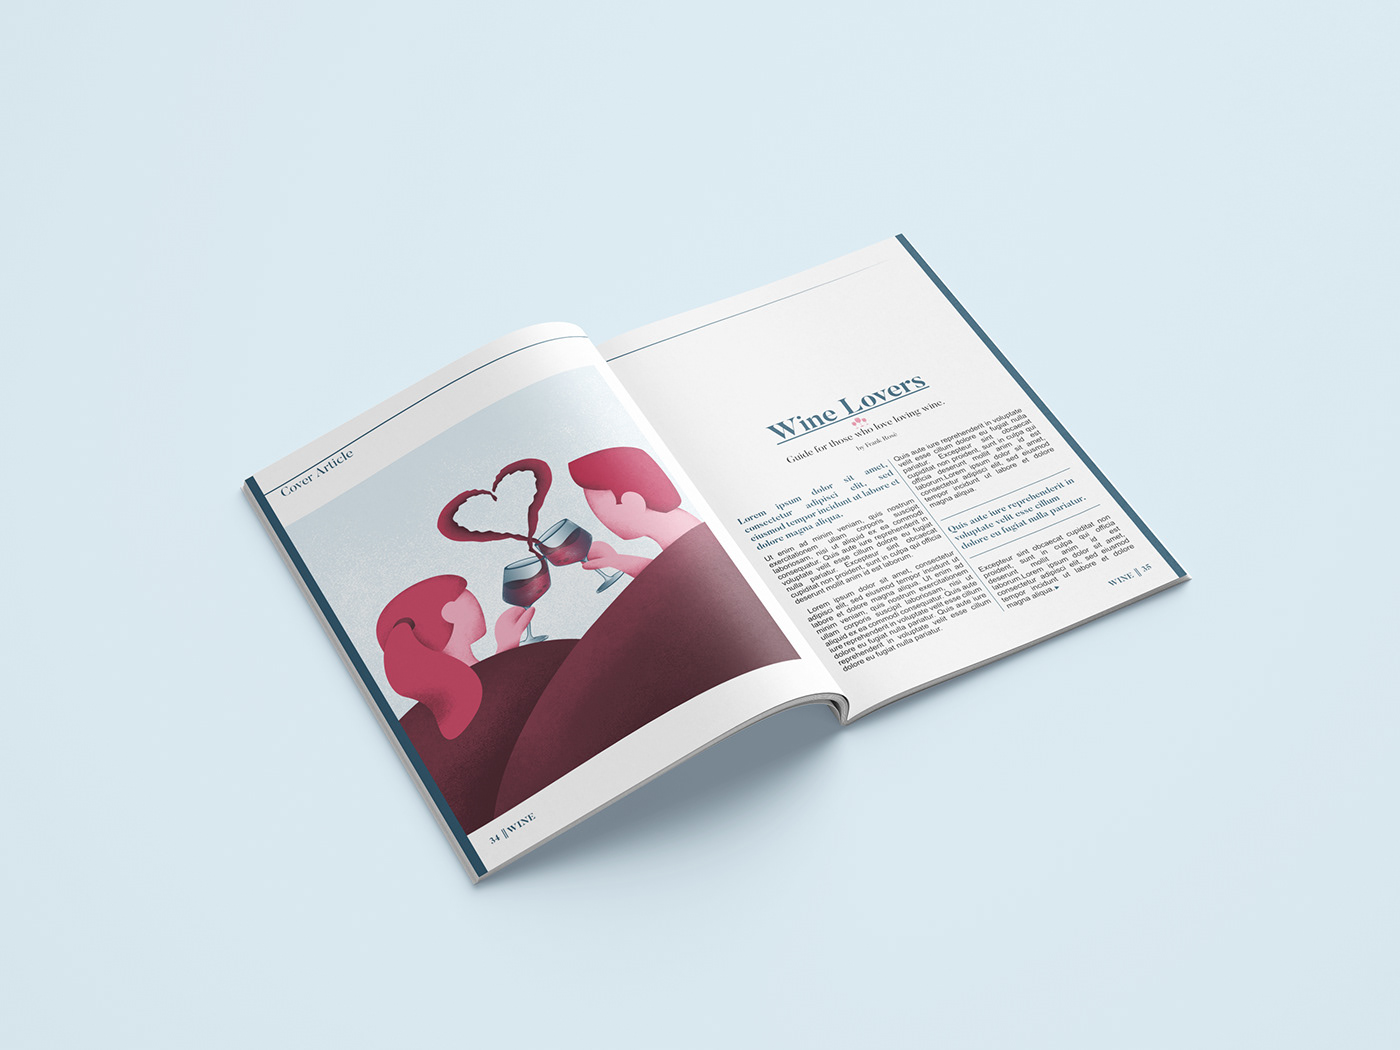 cover design editorial design  graphic design  ILLUSTRATION  magazine wine blue Love pink Food 